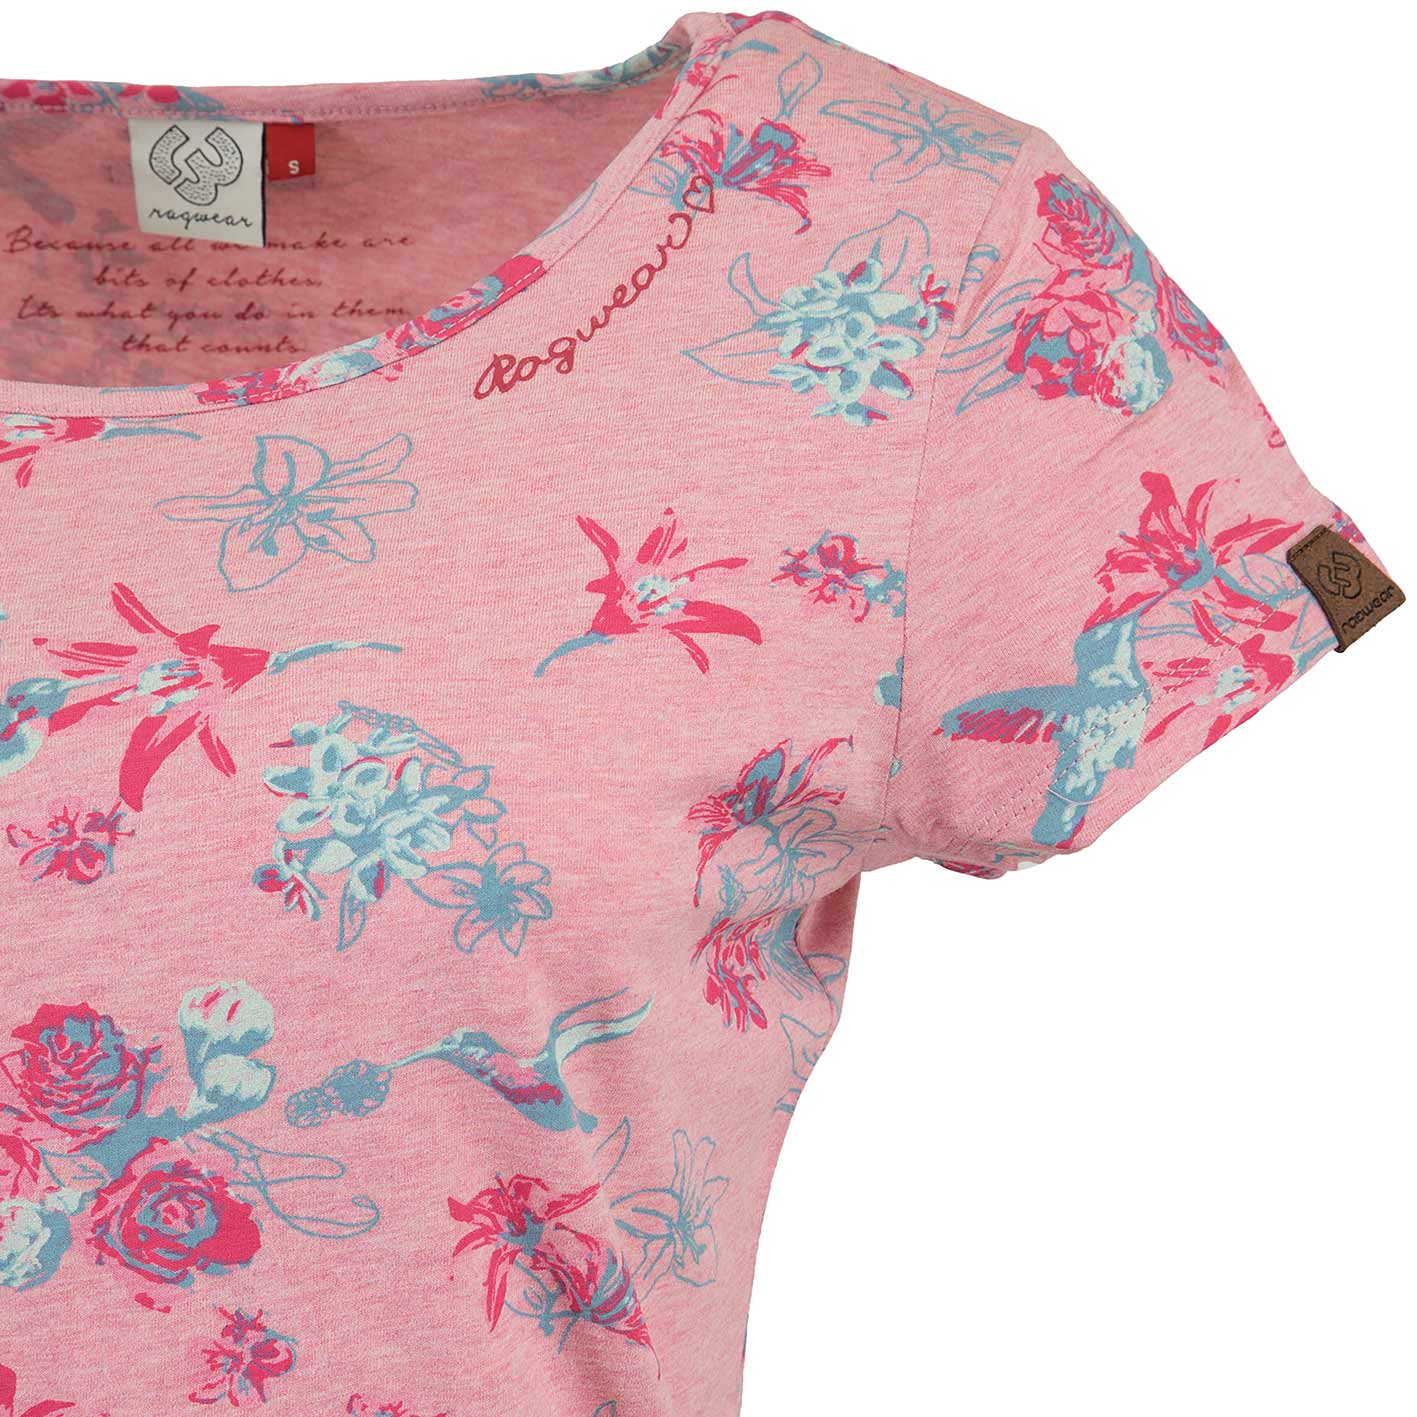 ☆ Ragwear Damen T-Shirt Mint Flowers rosa - hier bestellen!